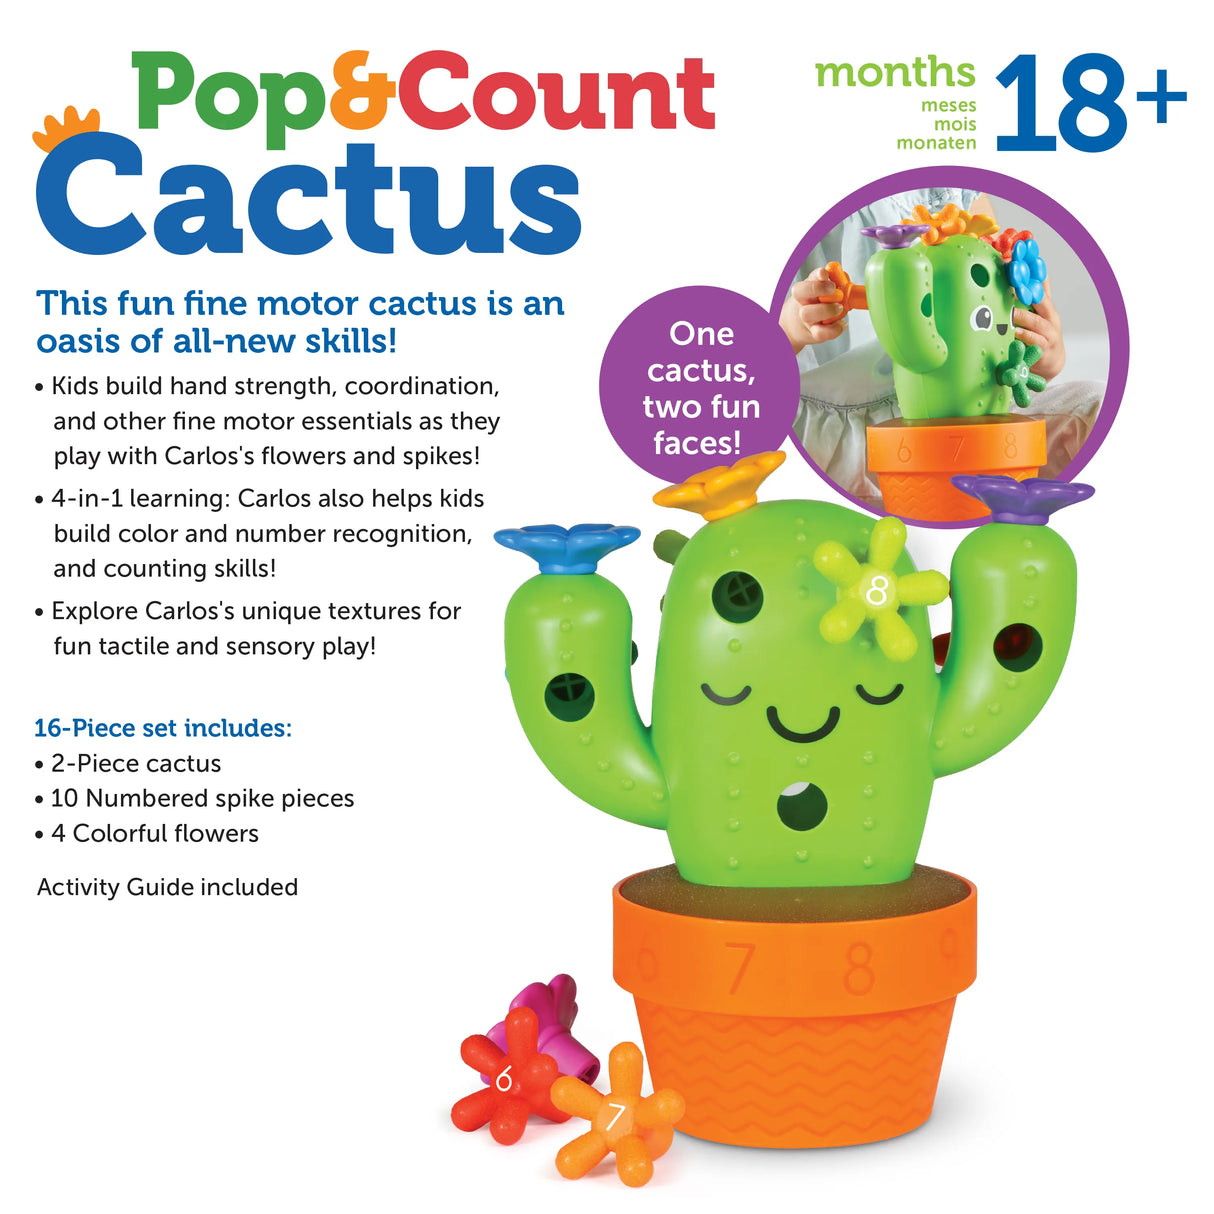 Carlos the Pop & Count Cactus